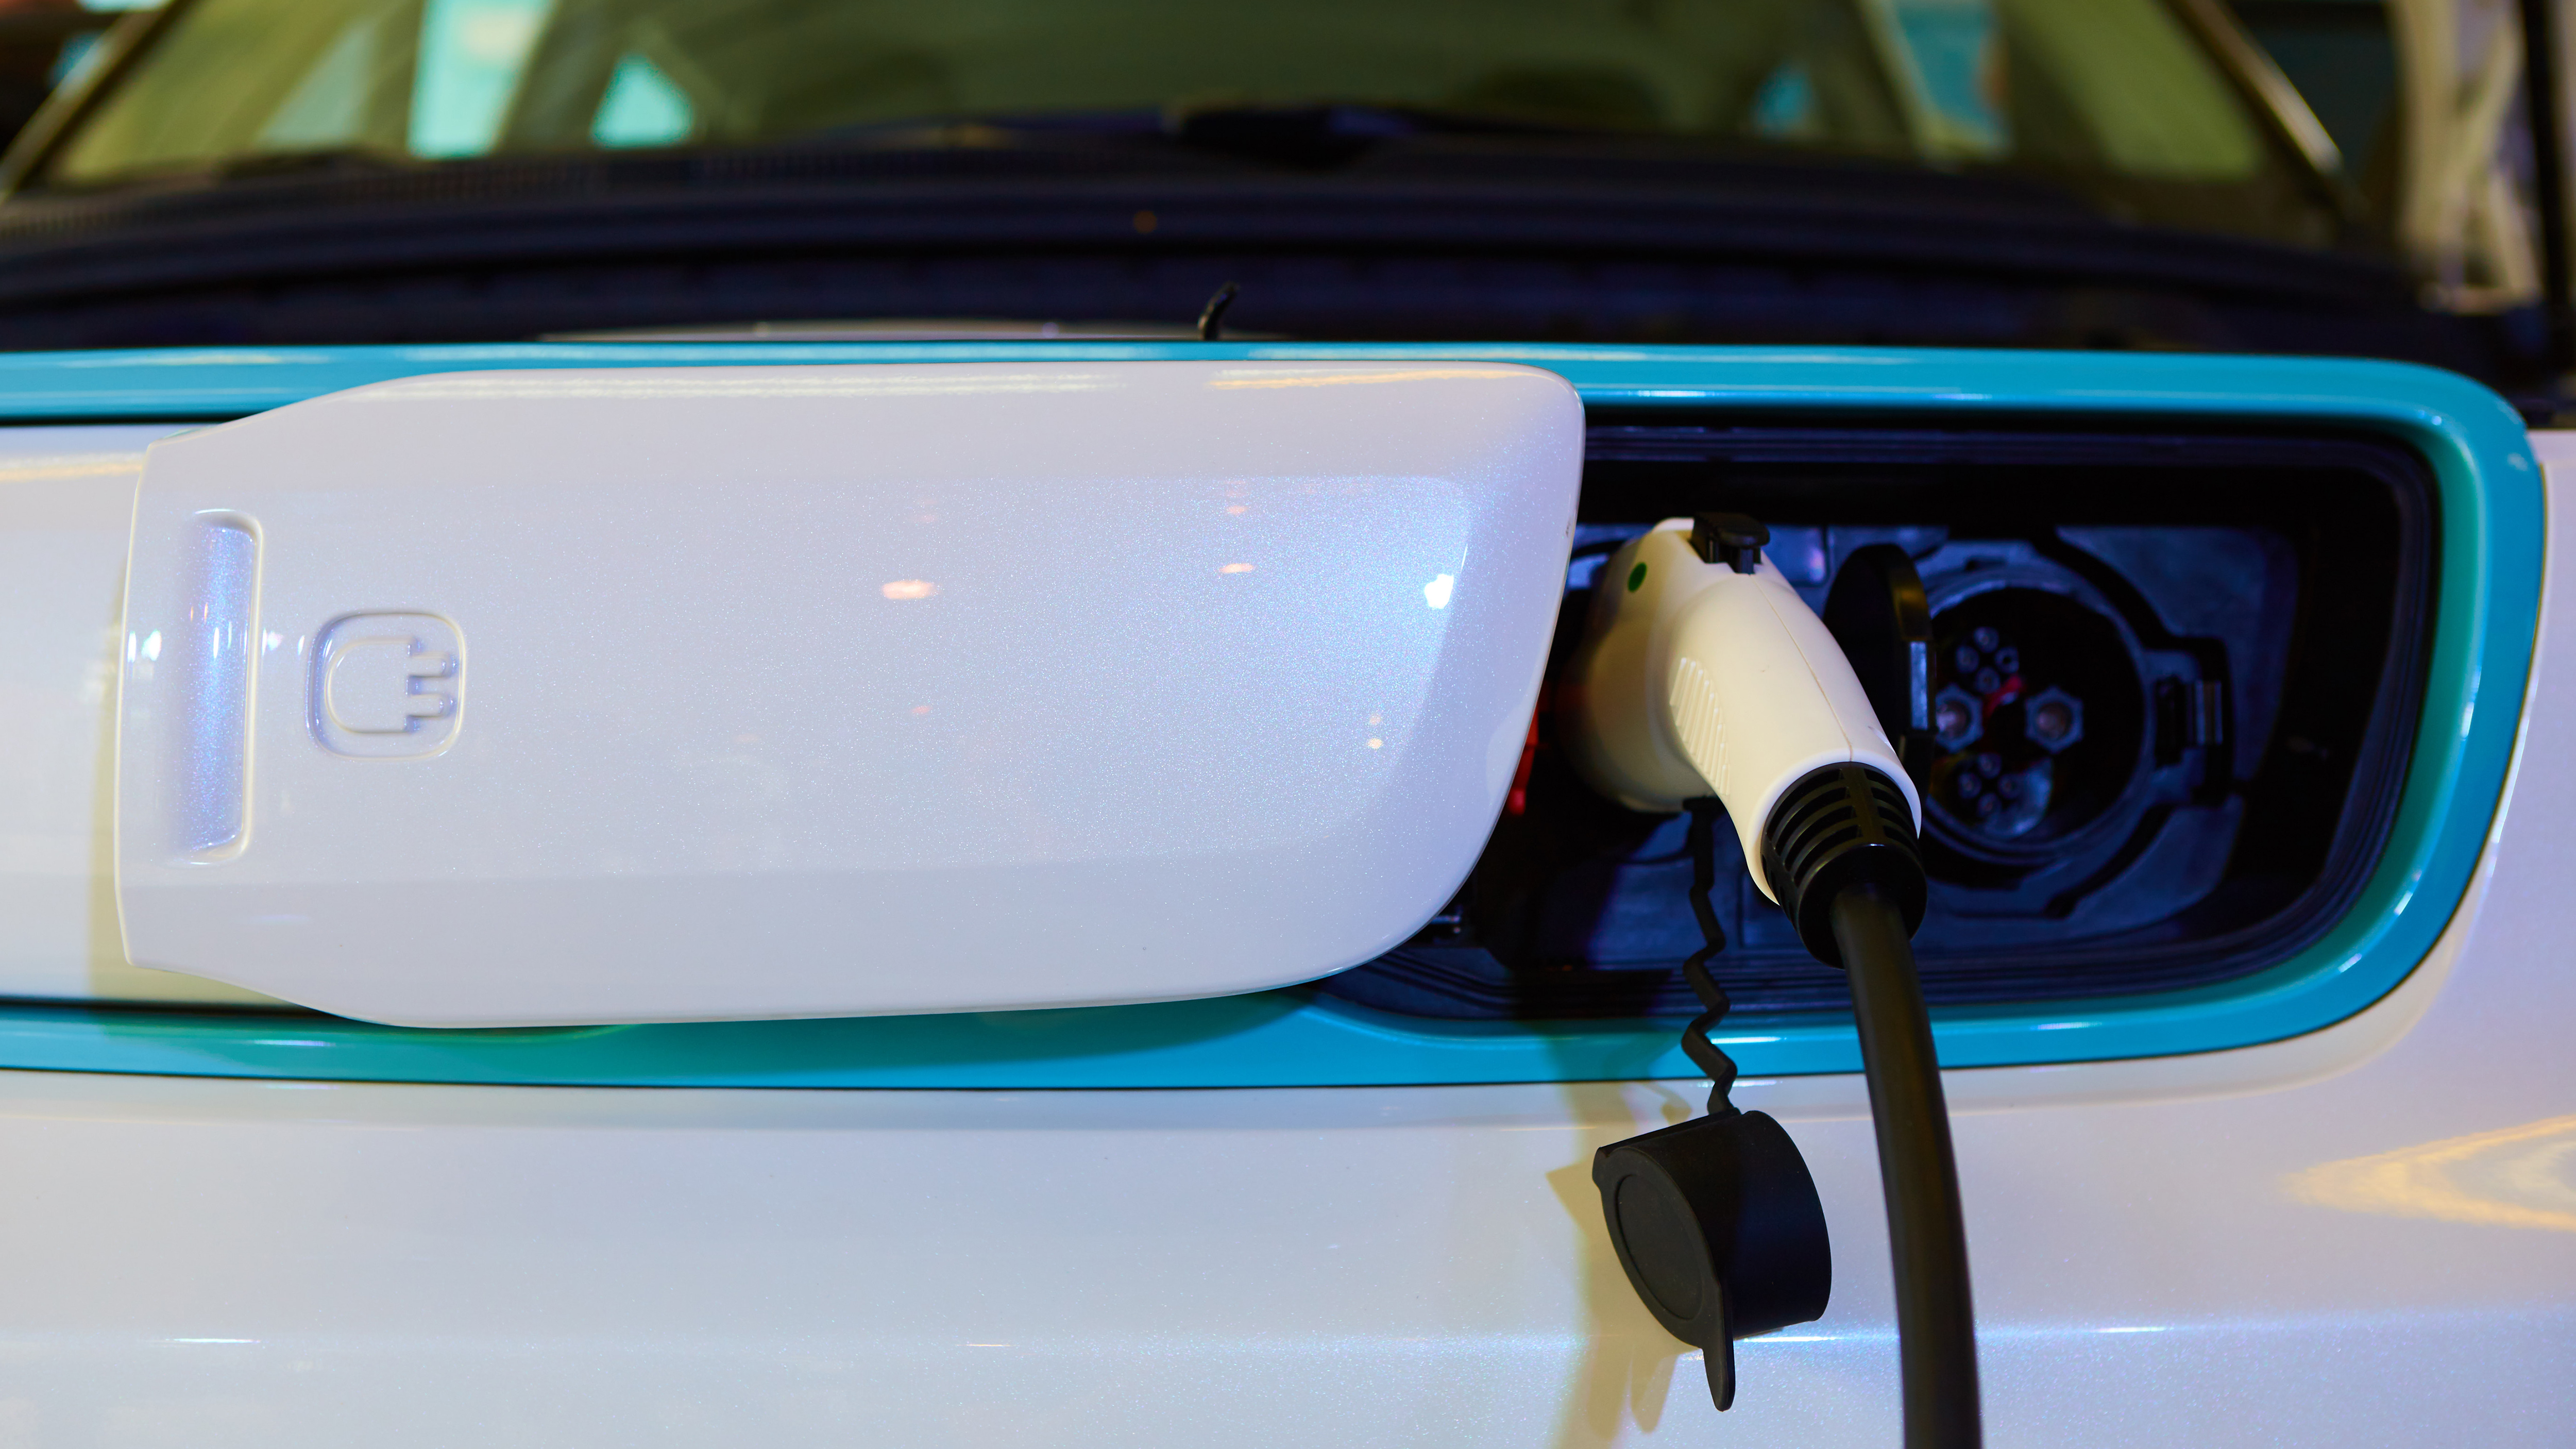 Charging an electric car